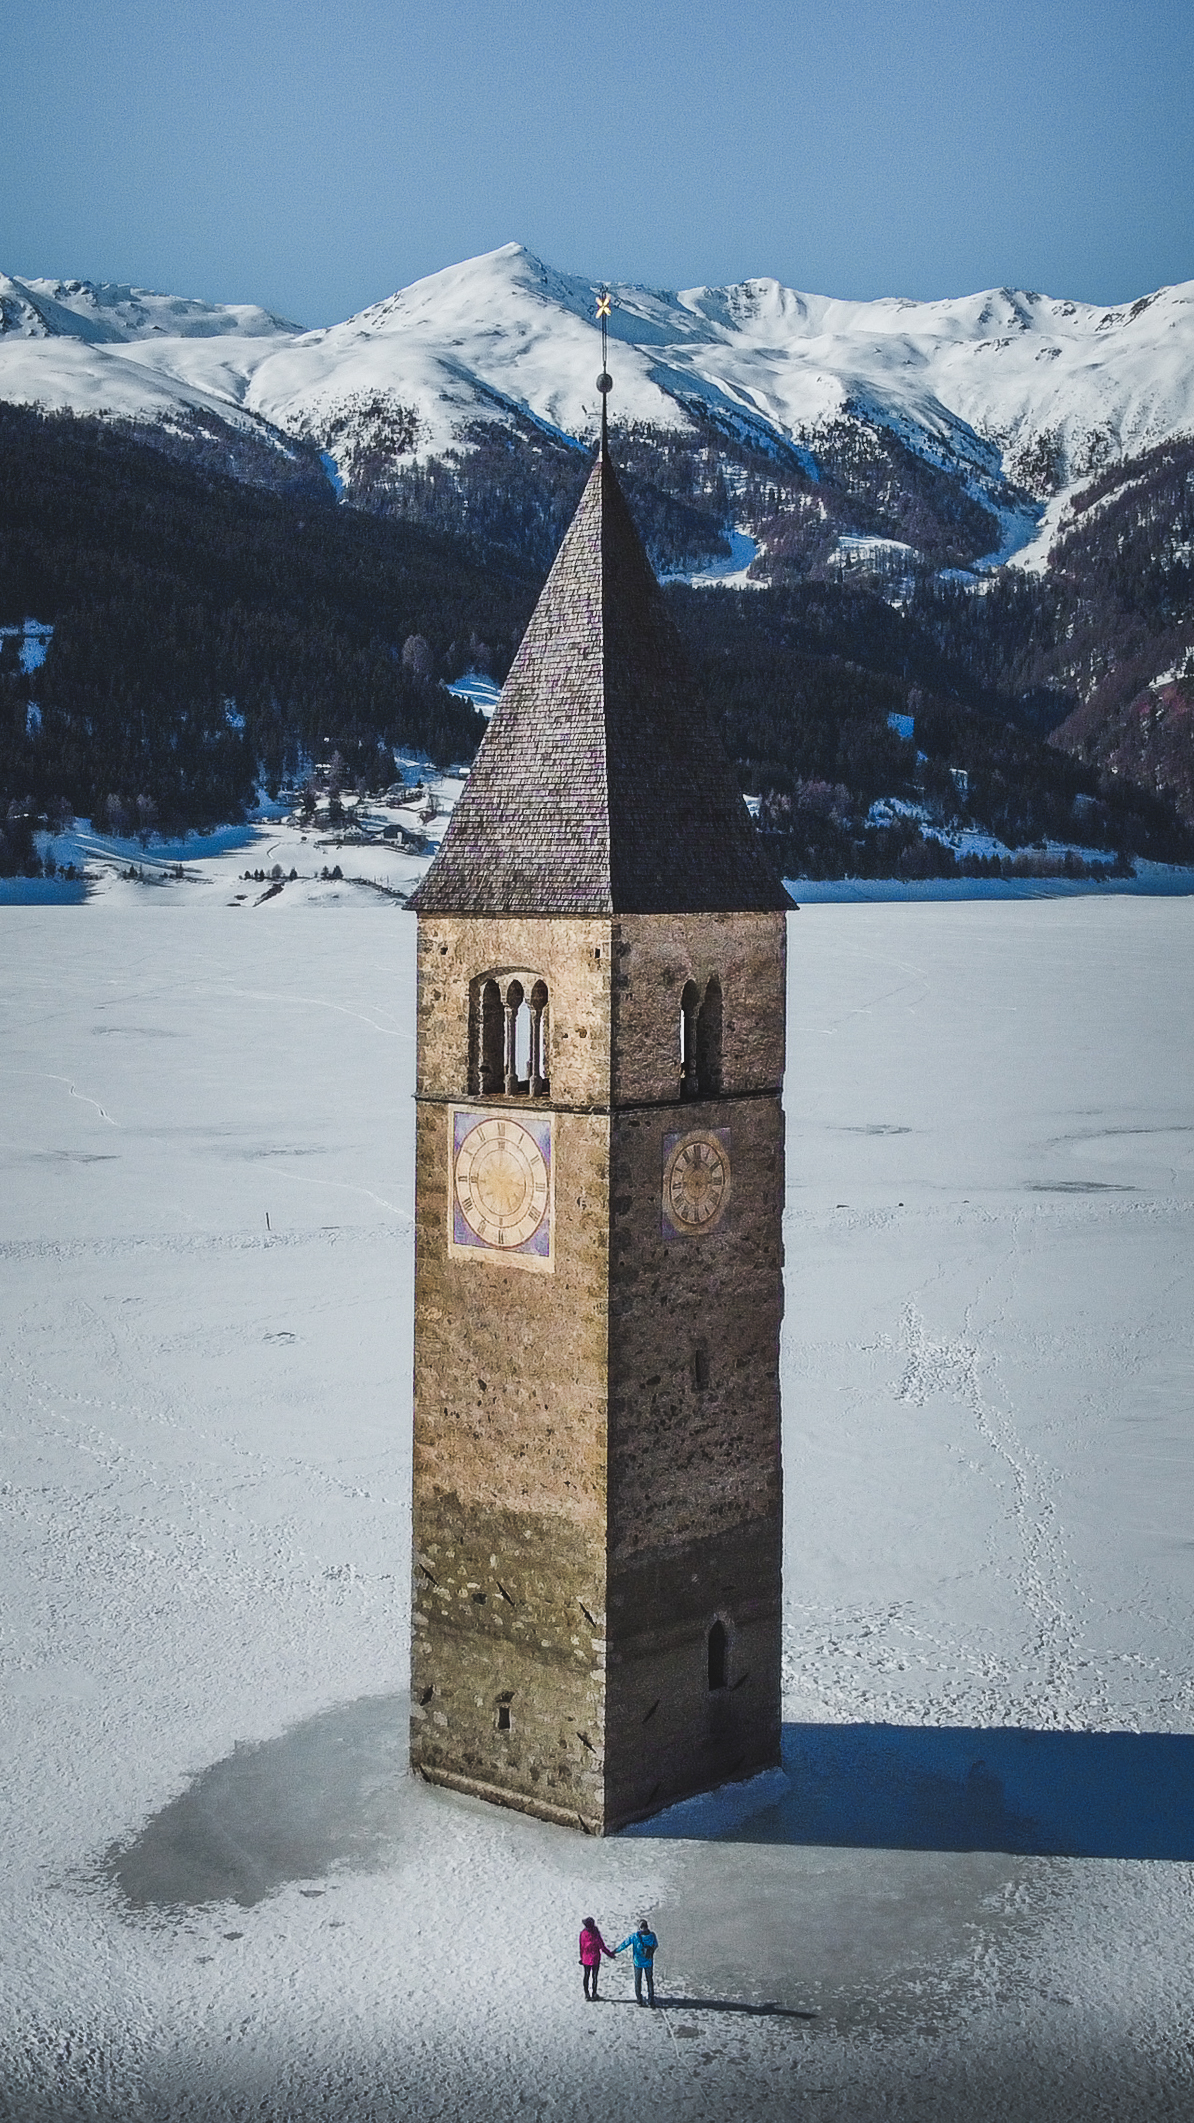 Luftaufnahme vom Turm im See in Grainau, Italien